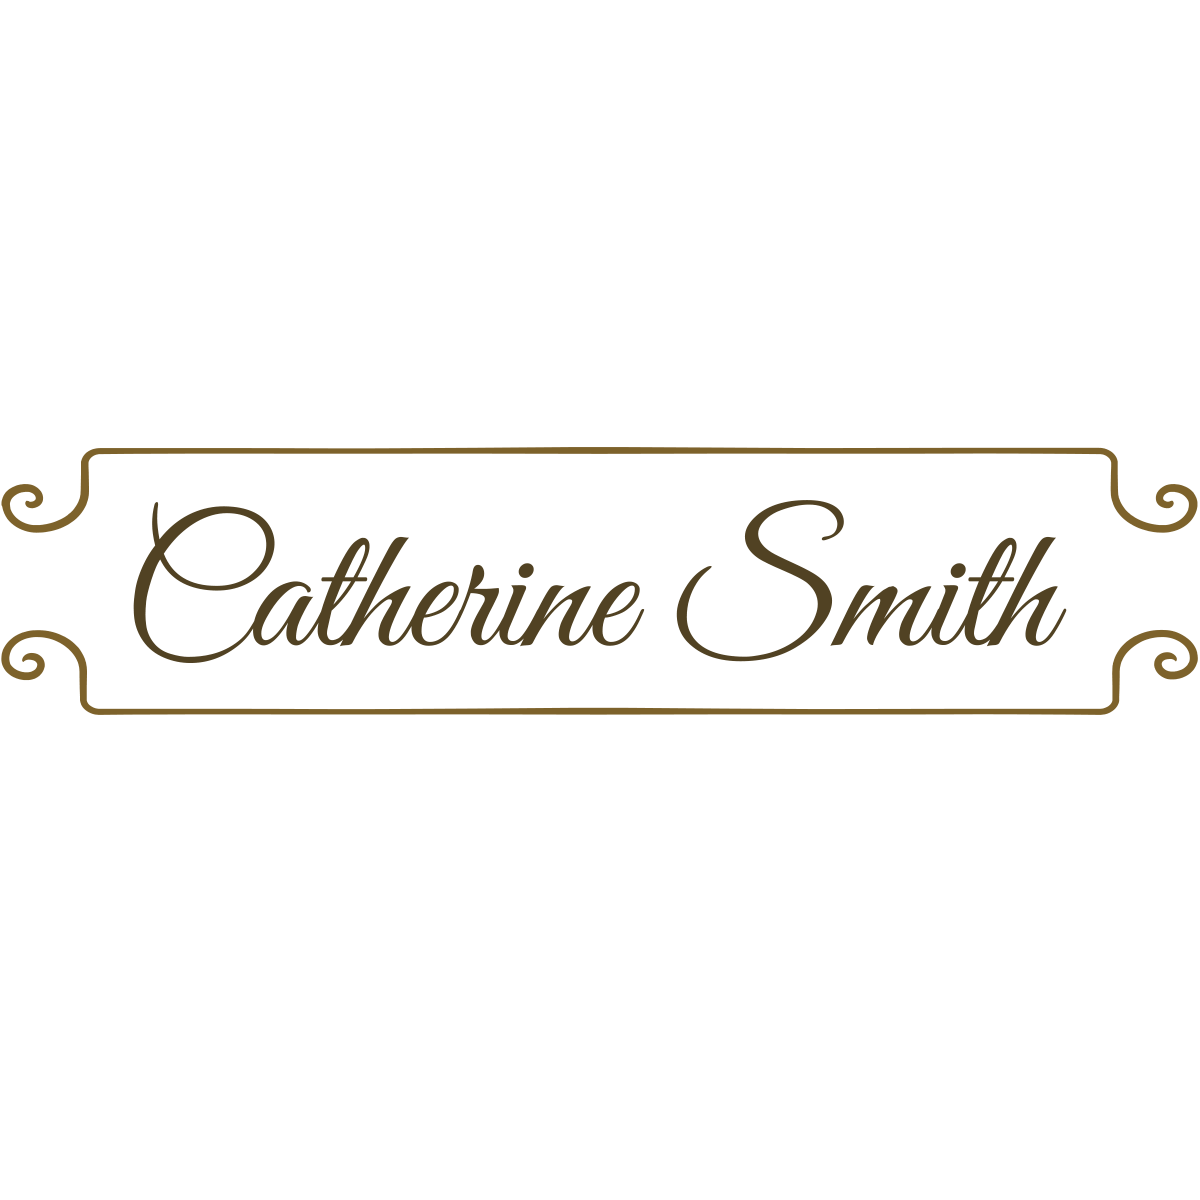 Catherine Smith logo